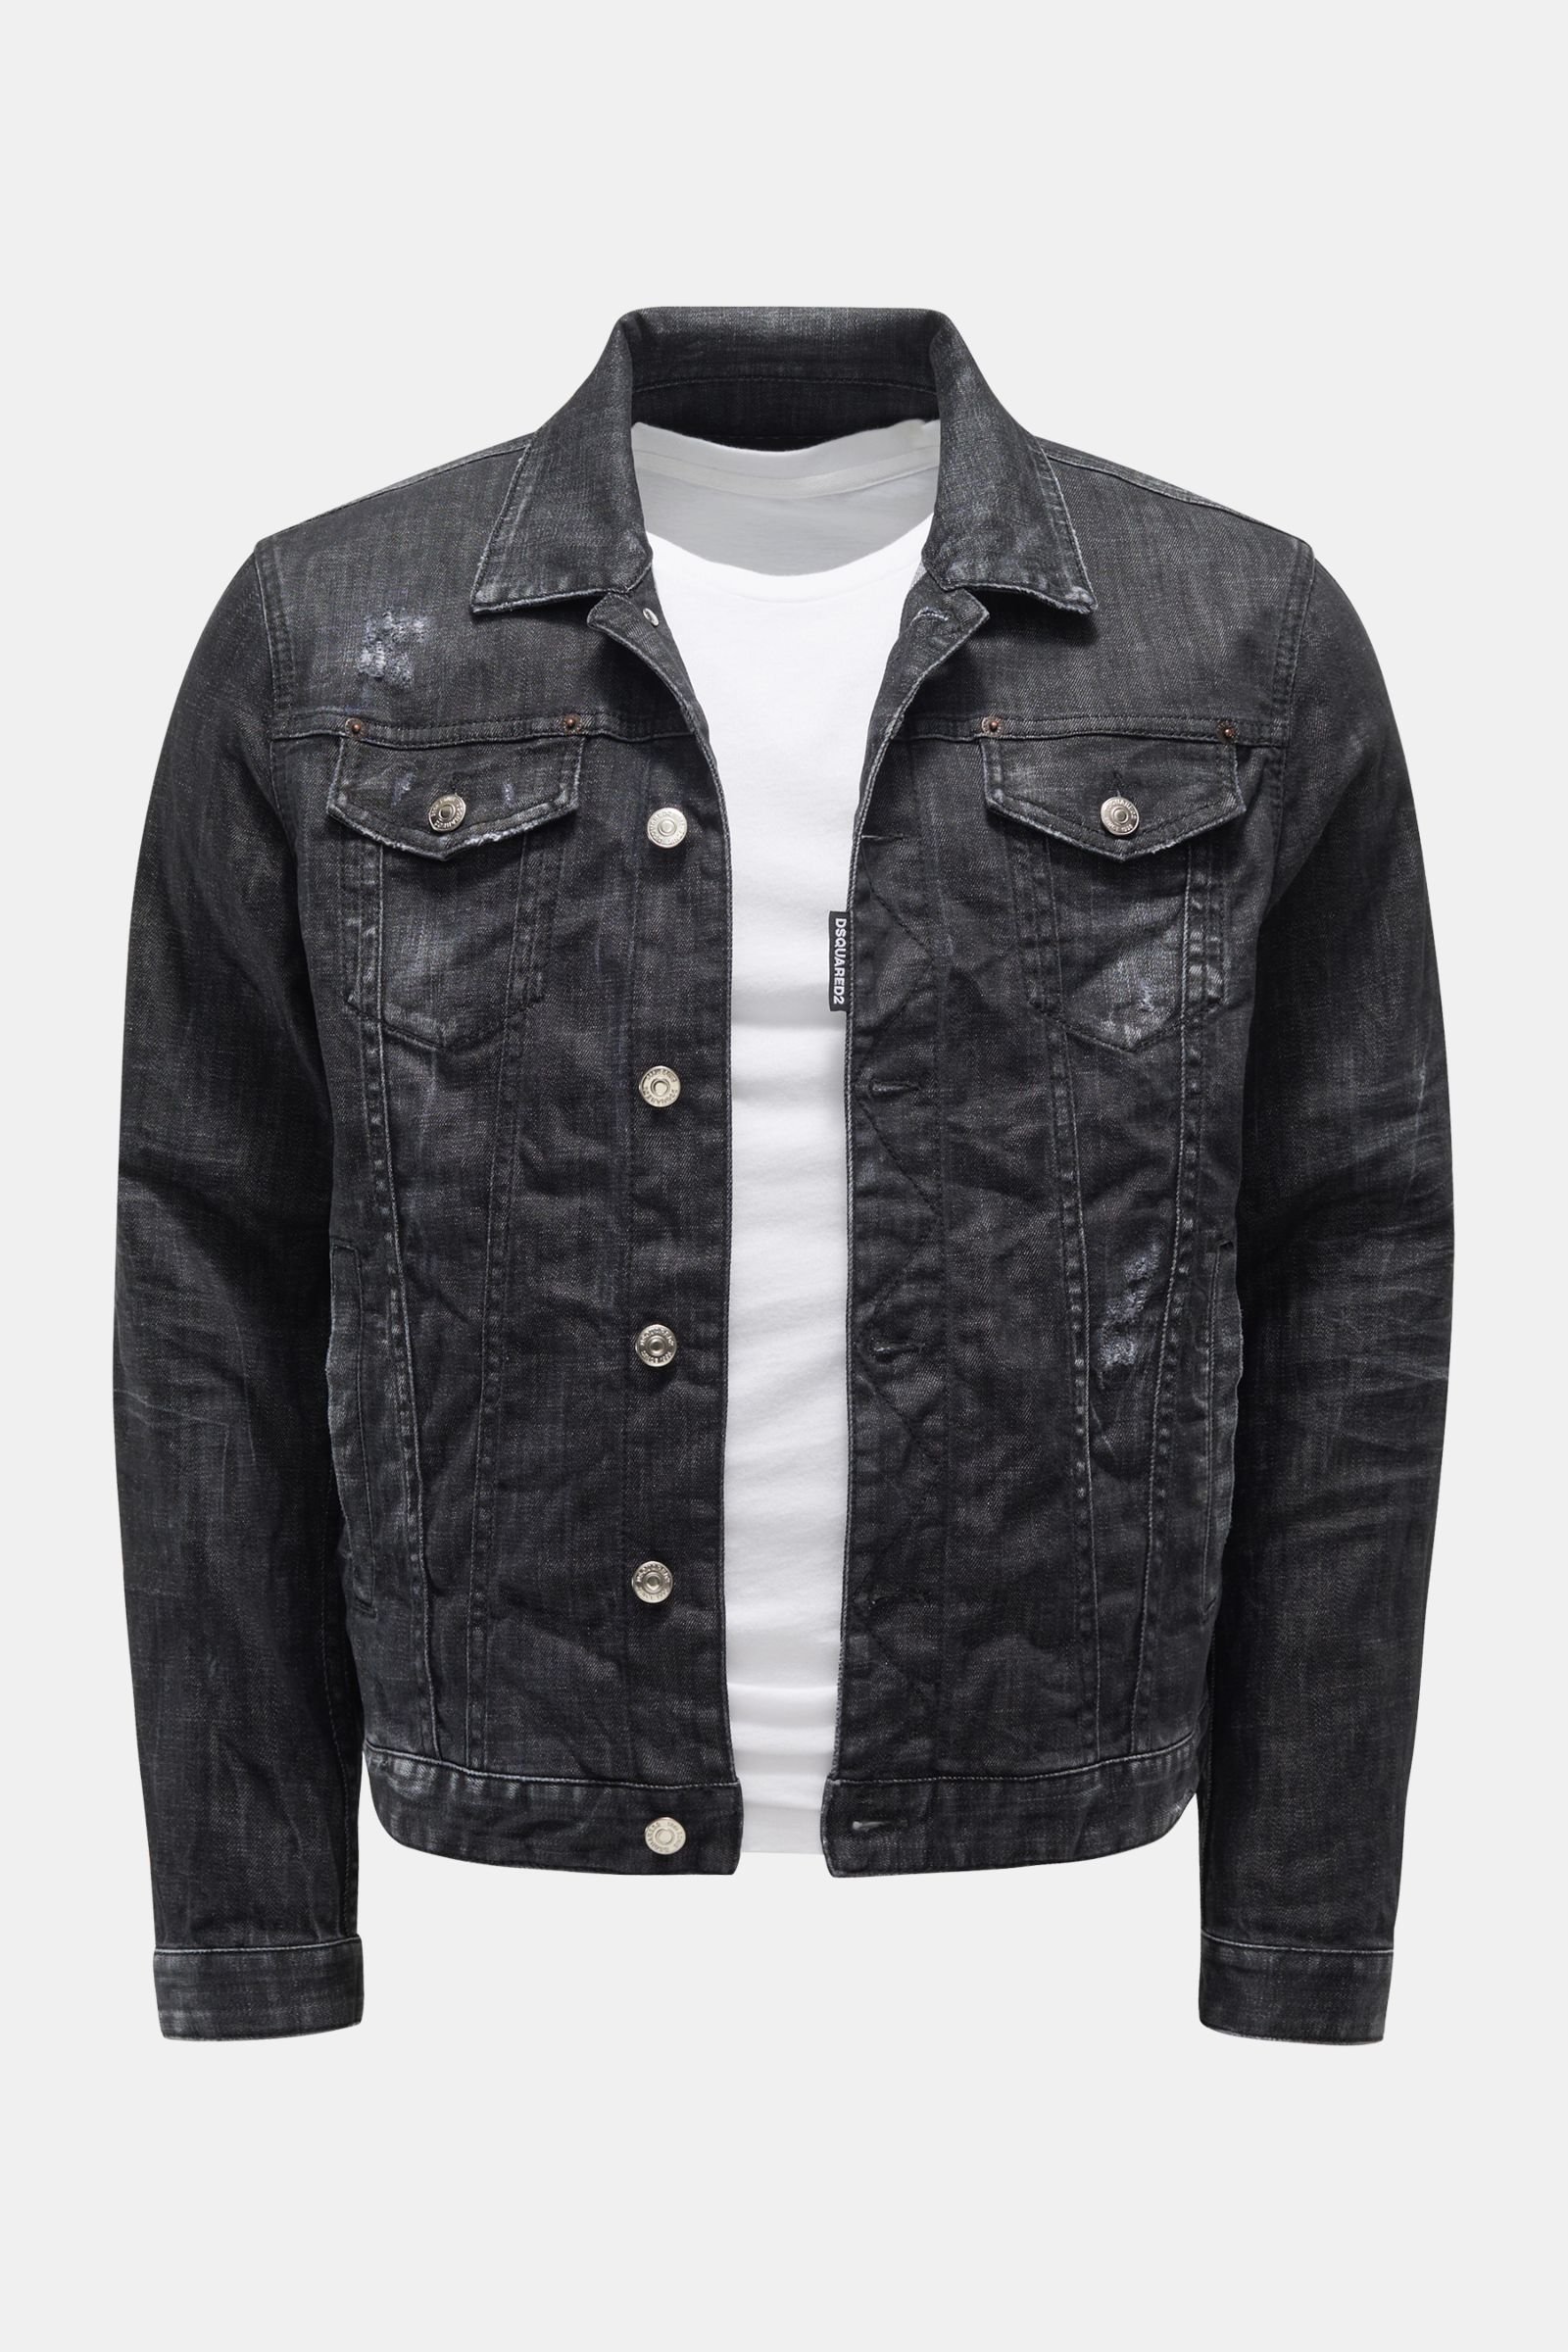 Buy KLIZEN Men's Regular Fit Full Sleeve Denim Jacket (Dark Grey, S) at  Amazon.in